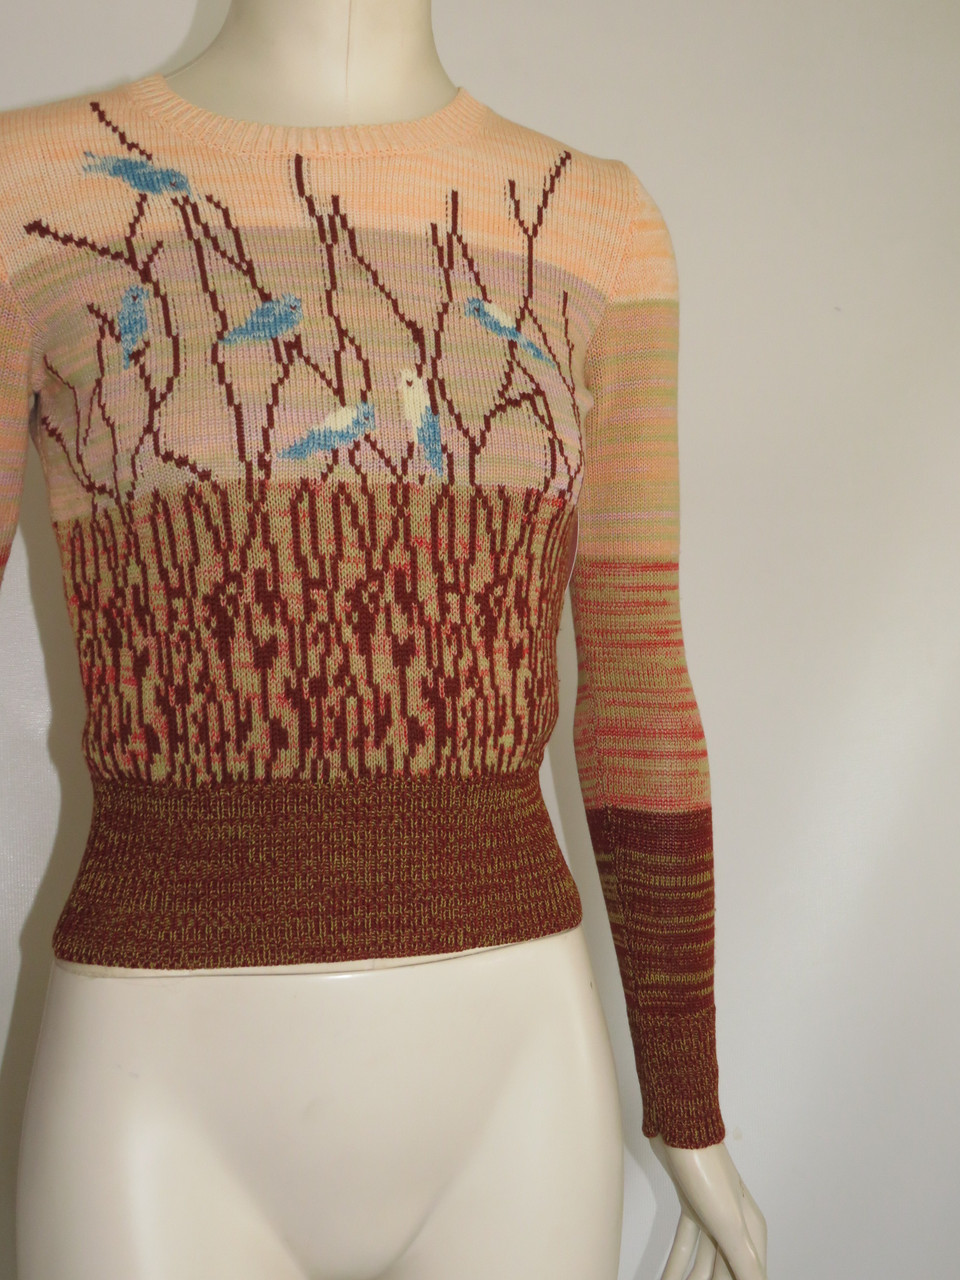 Vintage Bird Pattern Knit 80s Sweater 